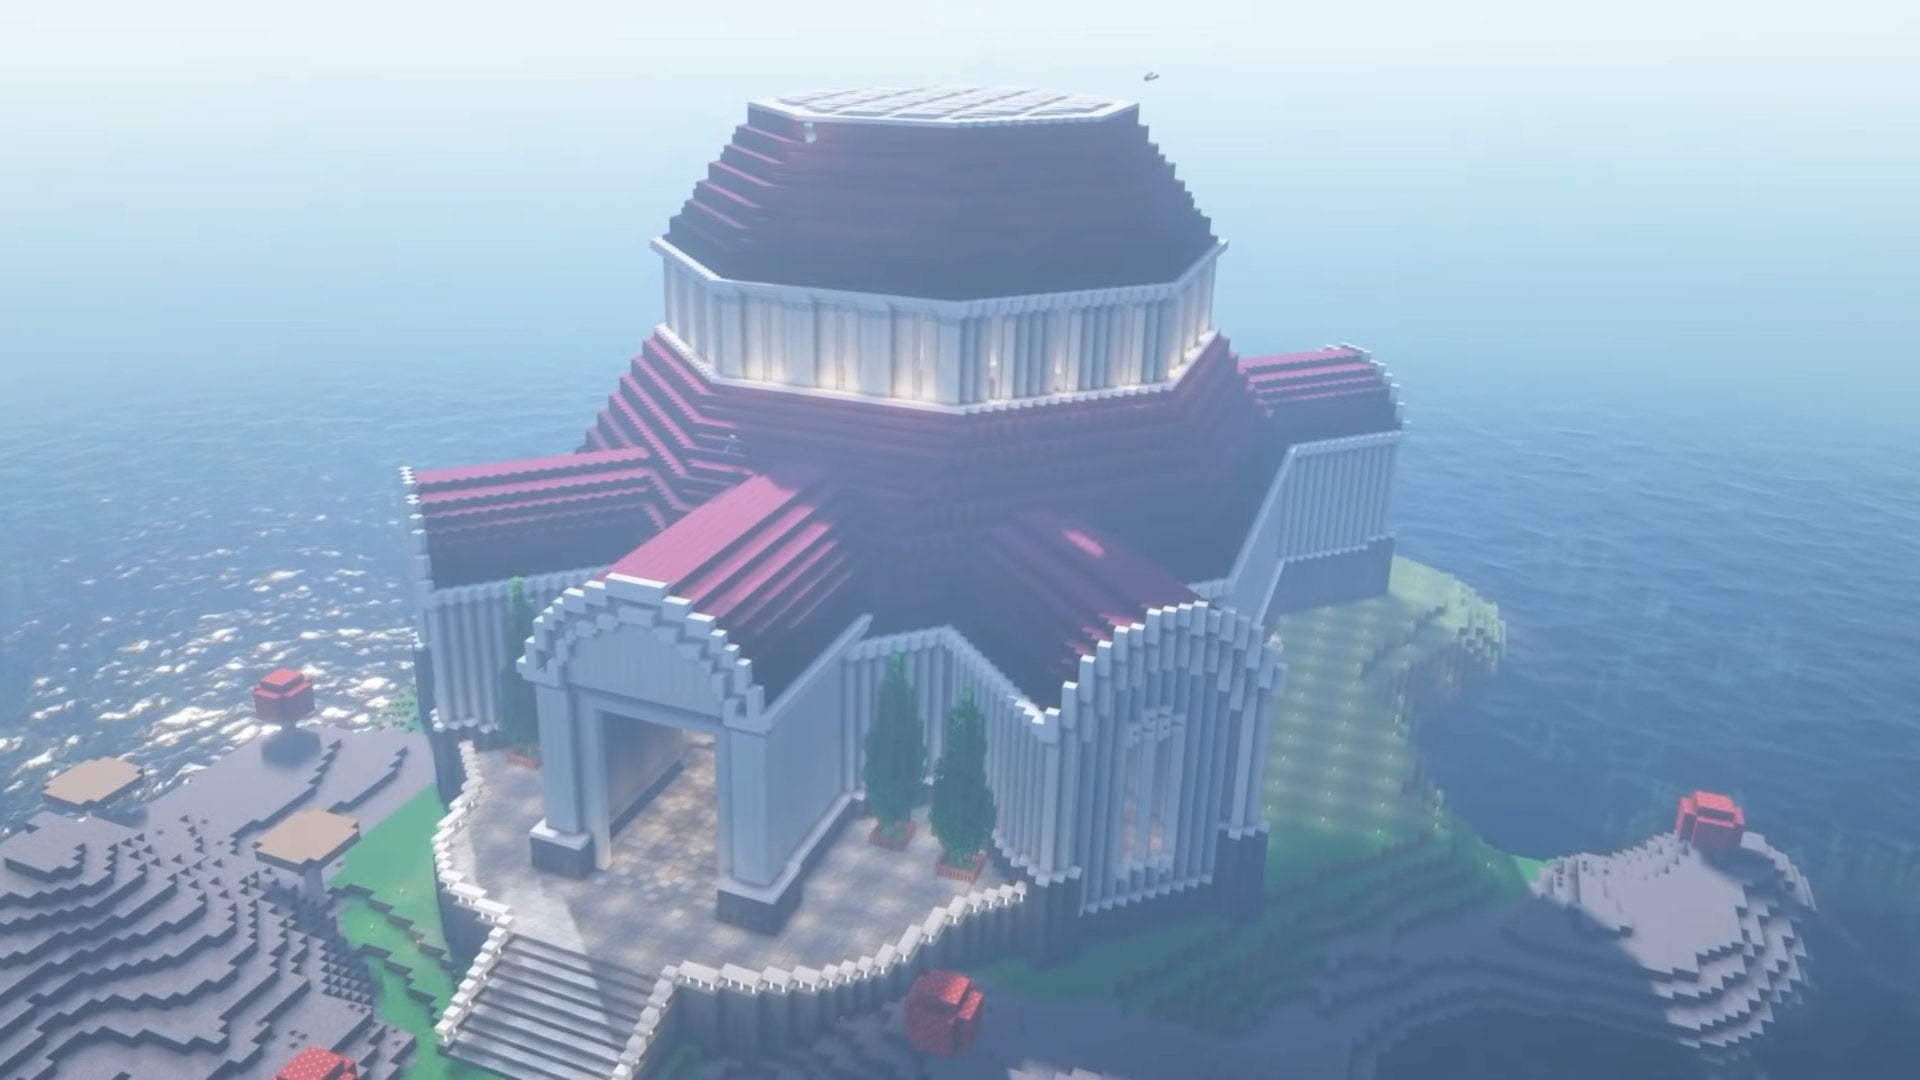 A screenshot of a Minecraft farm build.